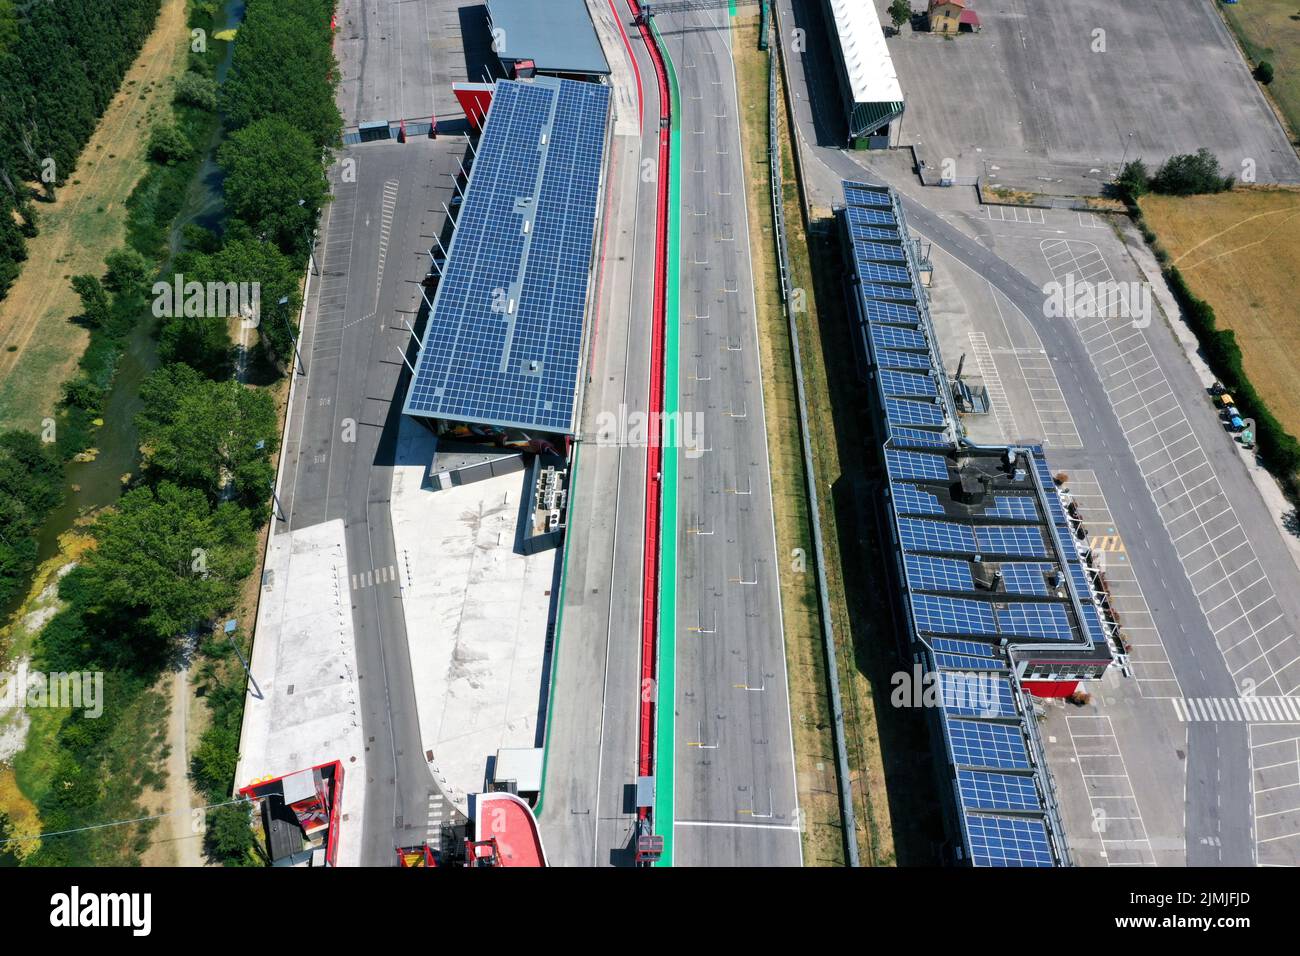 aerial view of the Imola racetrack, Imola, Bologna, Emilia Romagna, Italy Stock Photo